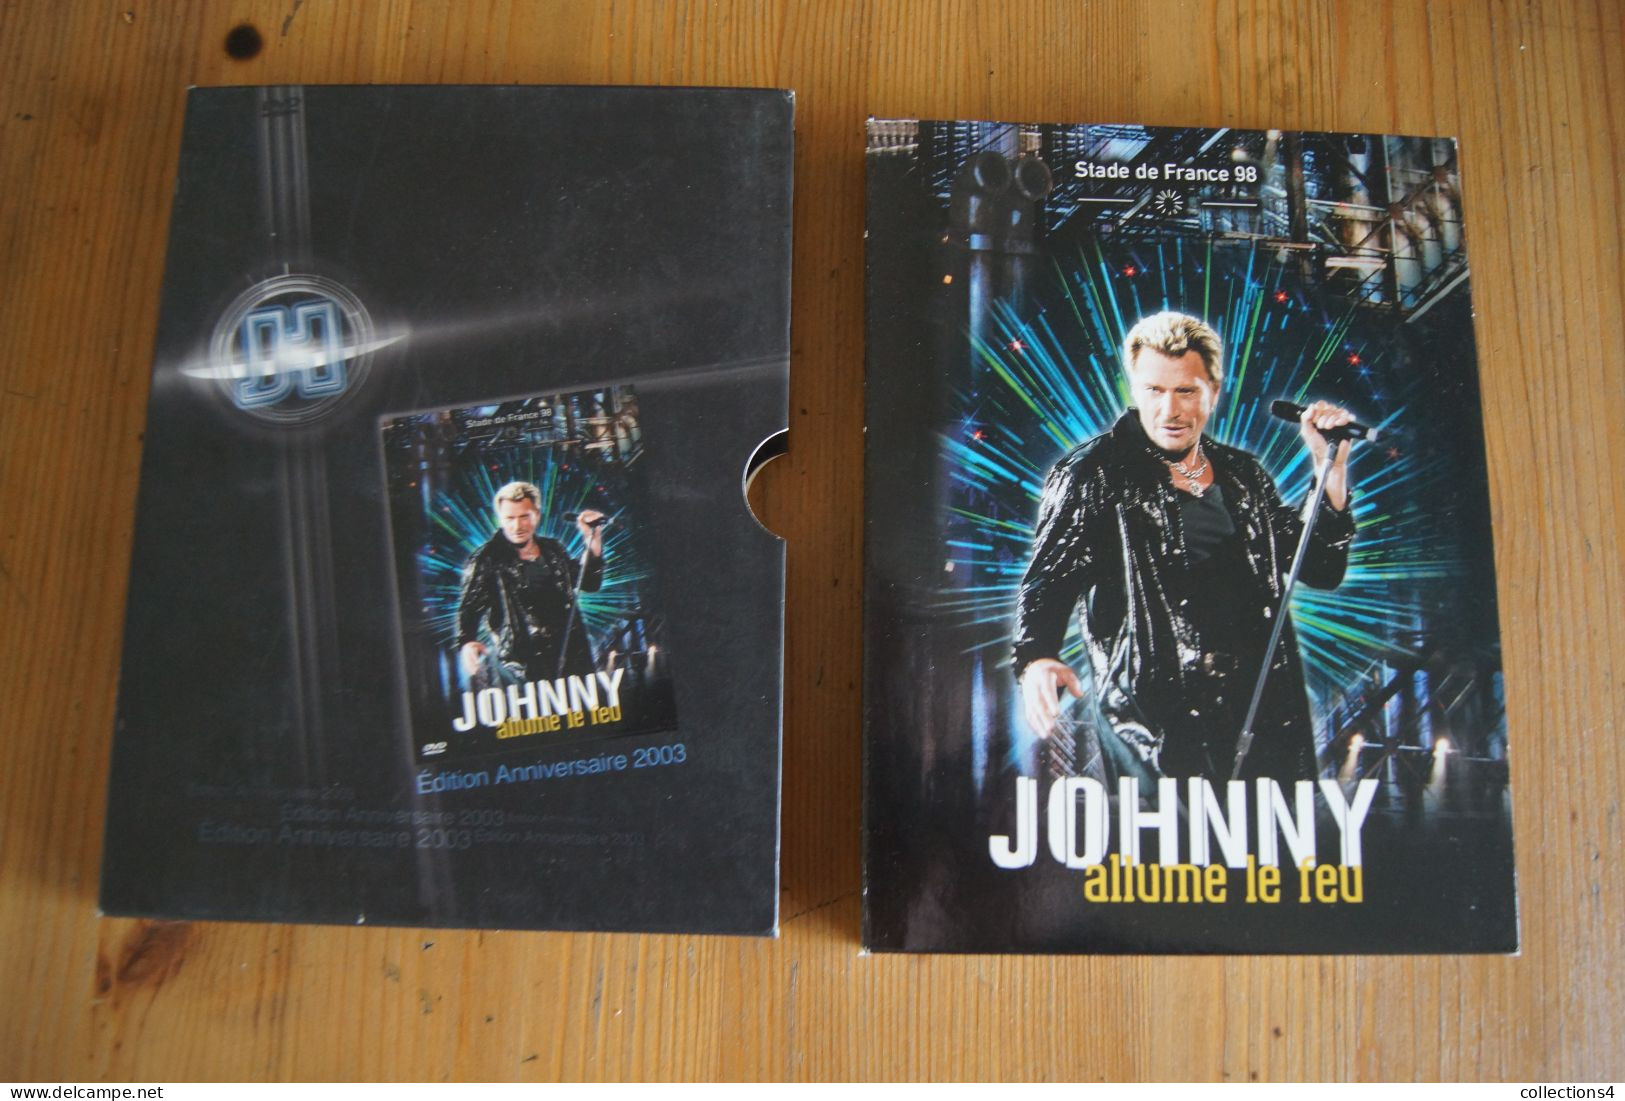 JOHNNY HALLYDAY ALLUME LE FEU EDITION ANNIVERSAIRE 2003 COFFRET 2 DVD VALEUR + - DVD Musicaux